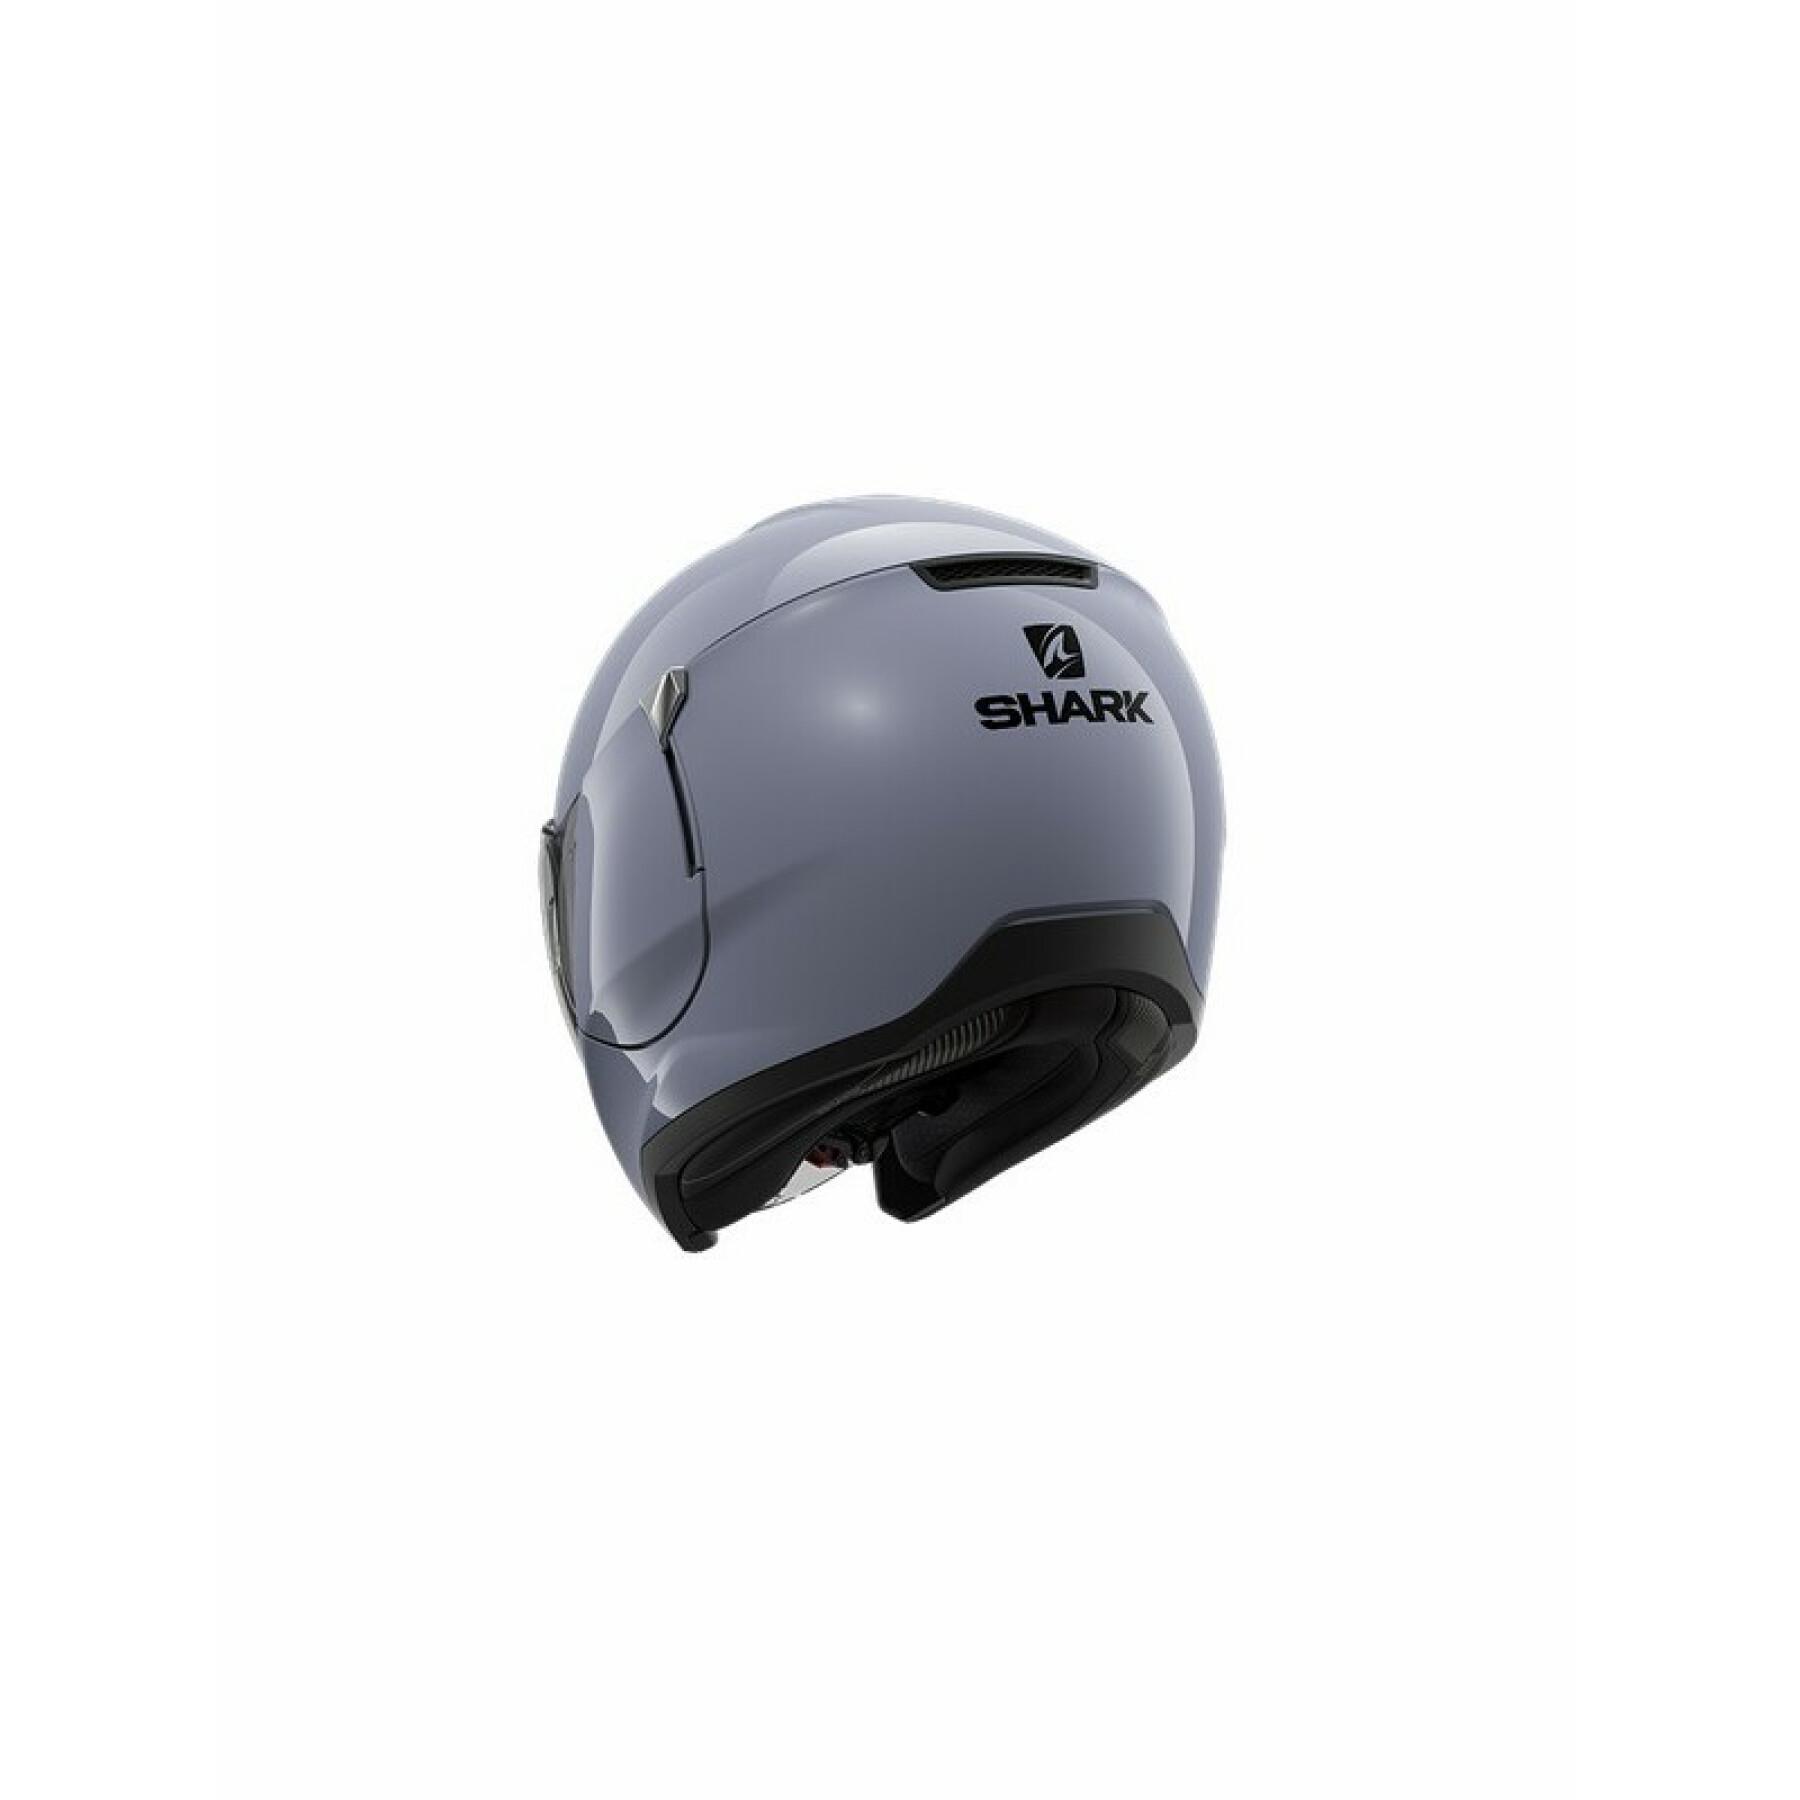 Jet motorcycle helmet Shark citycruiser blank